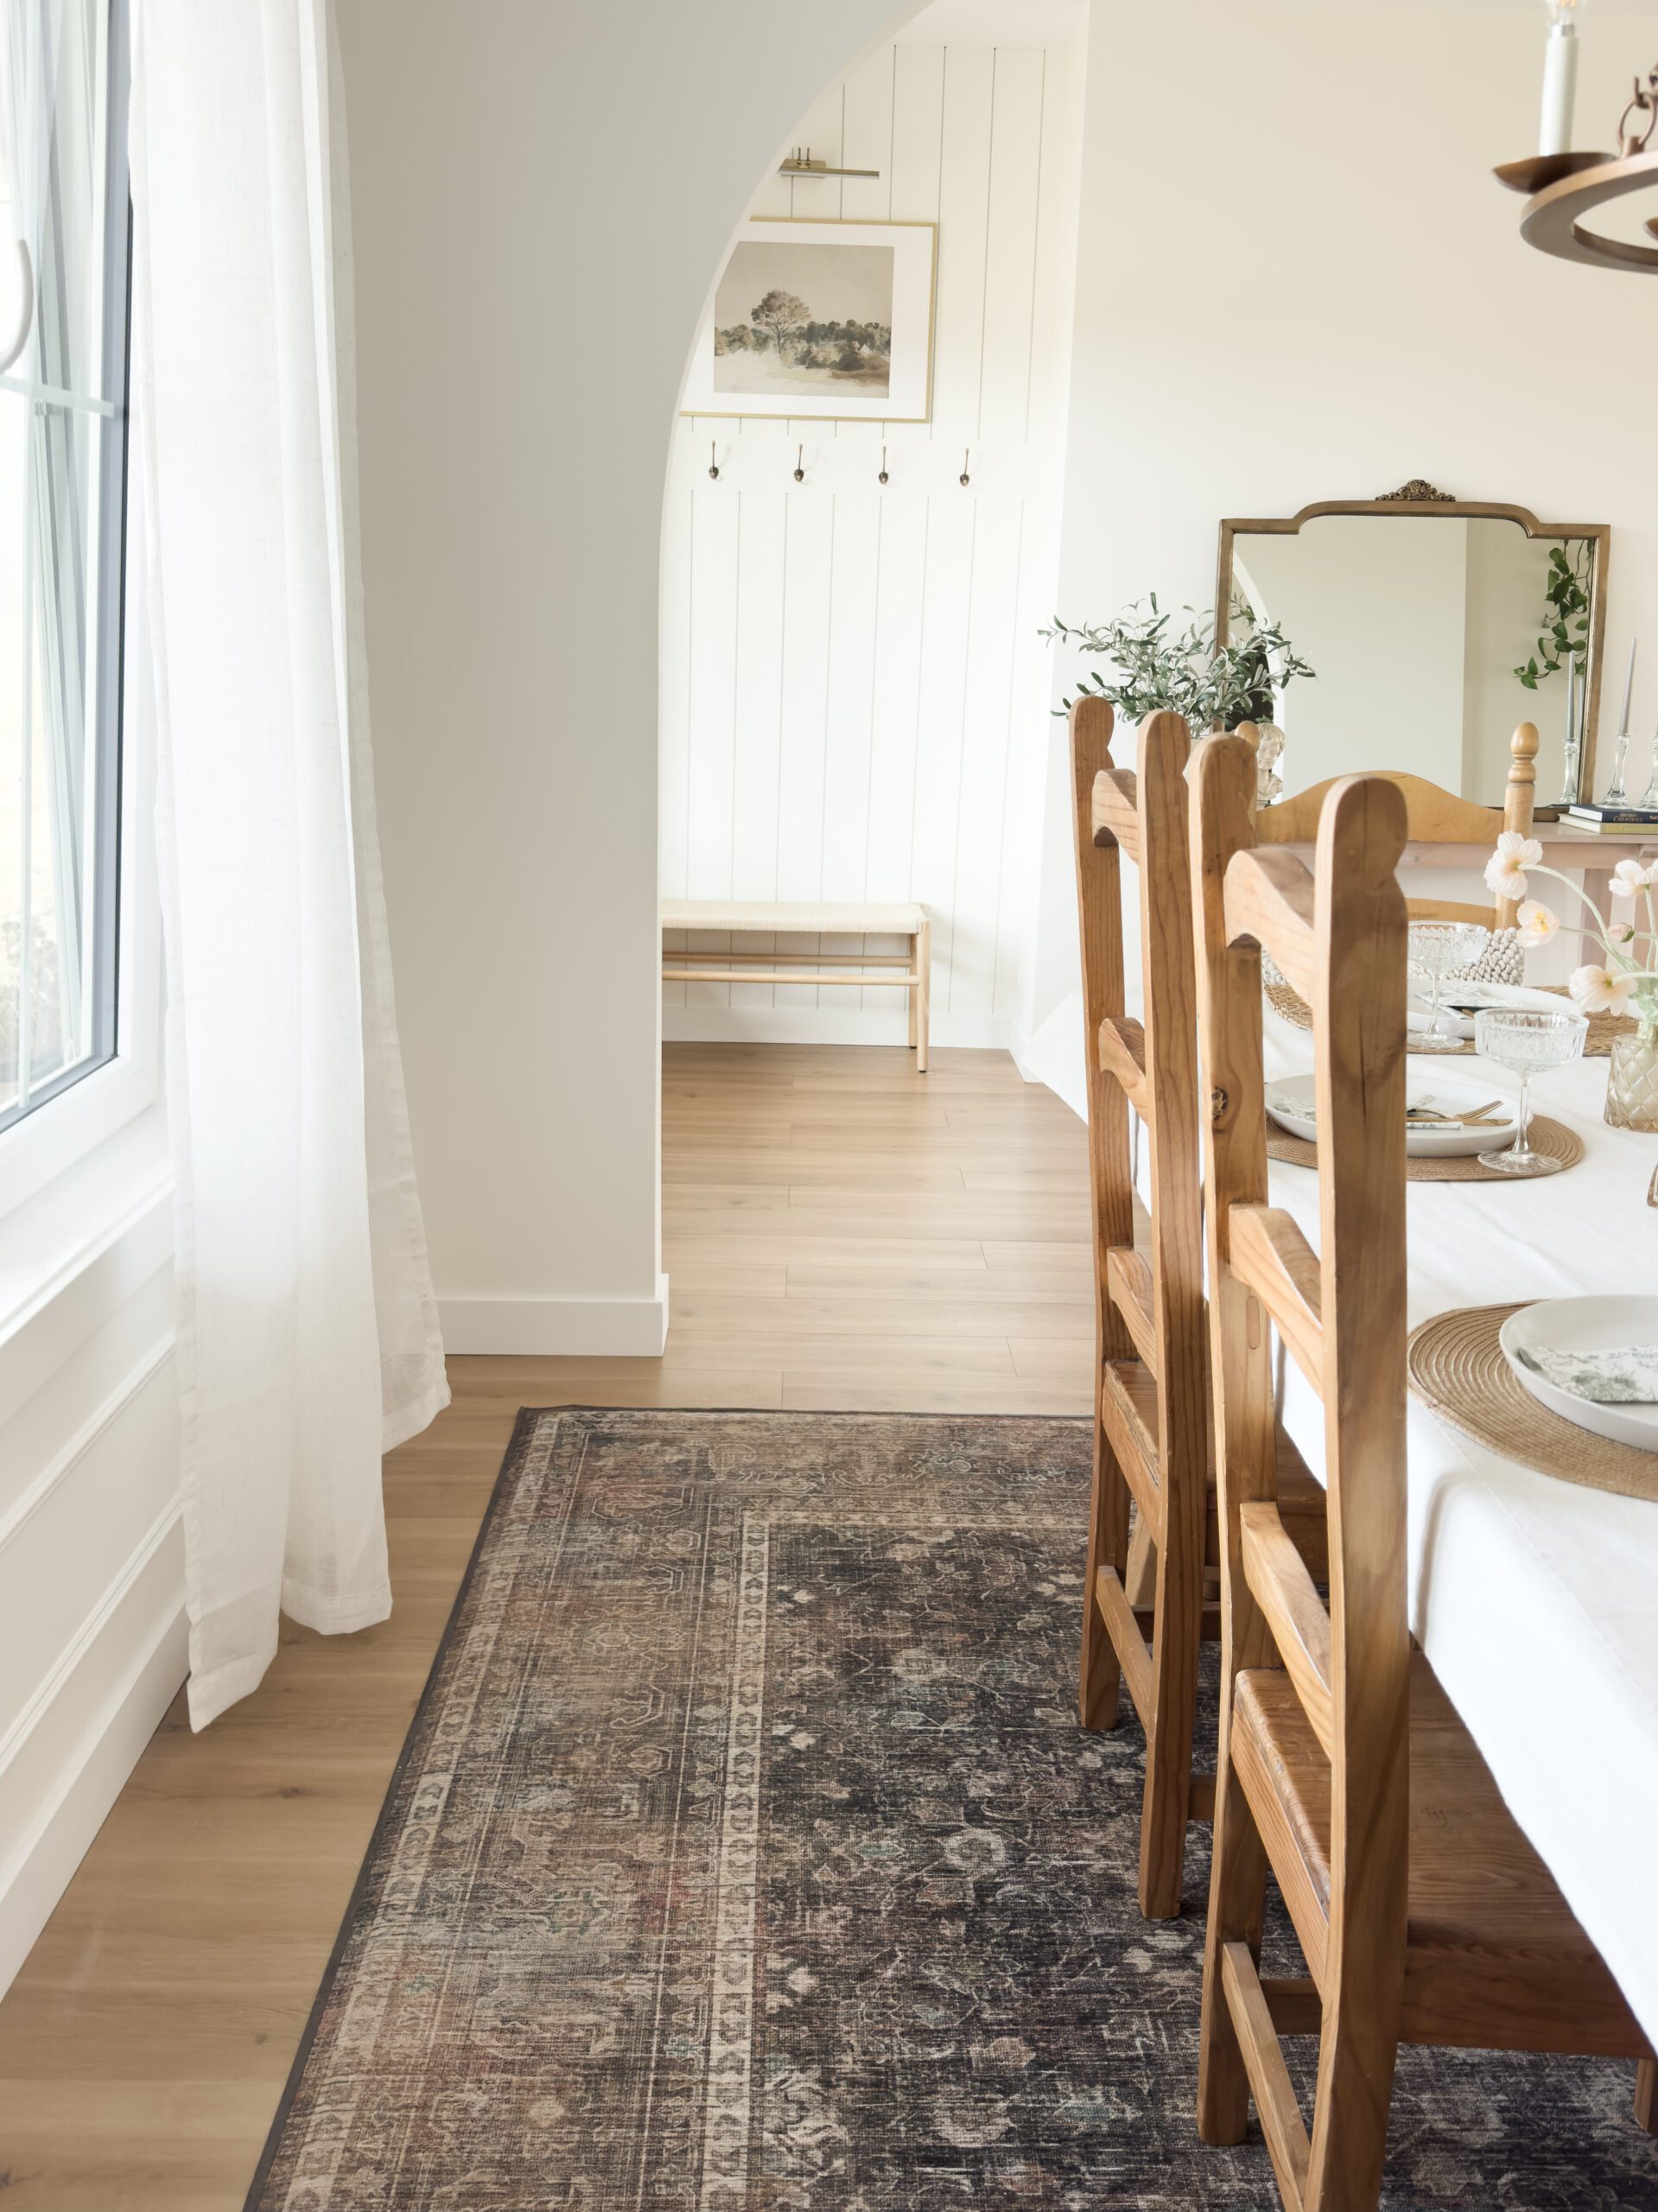 Our modern vintage dining room reveal